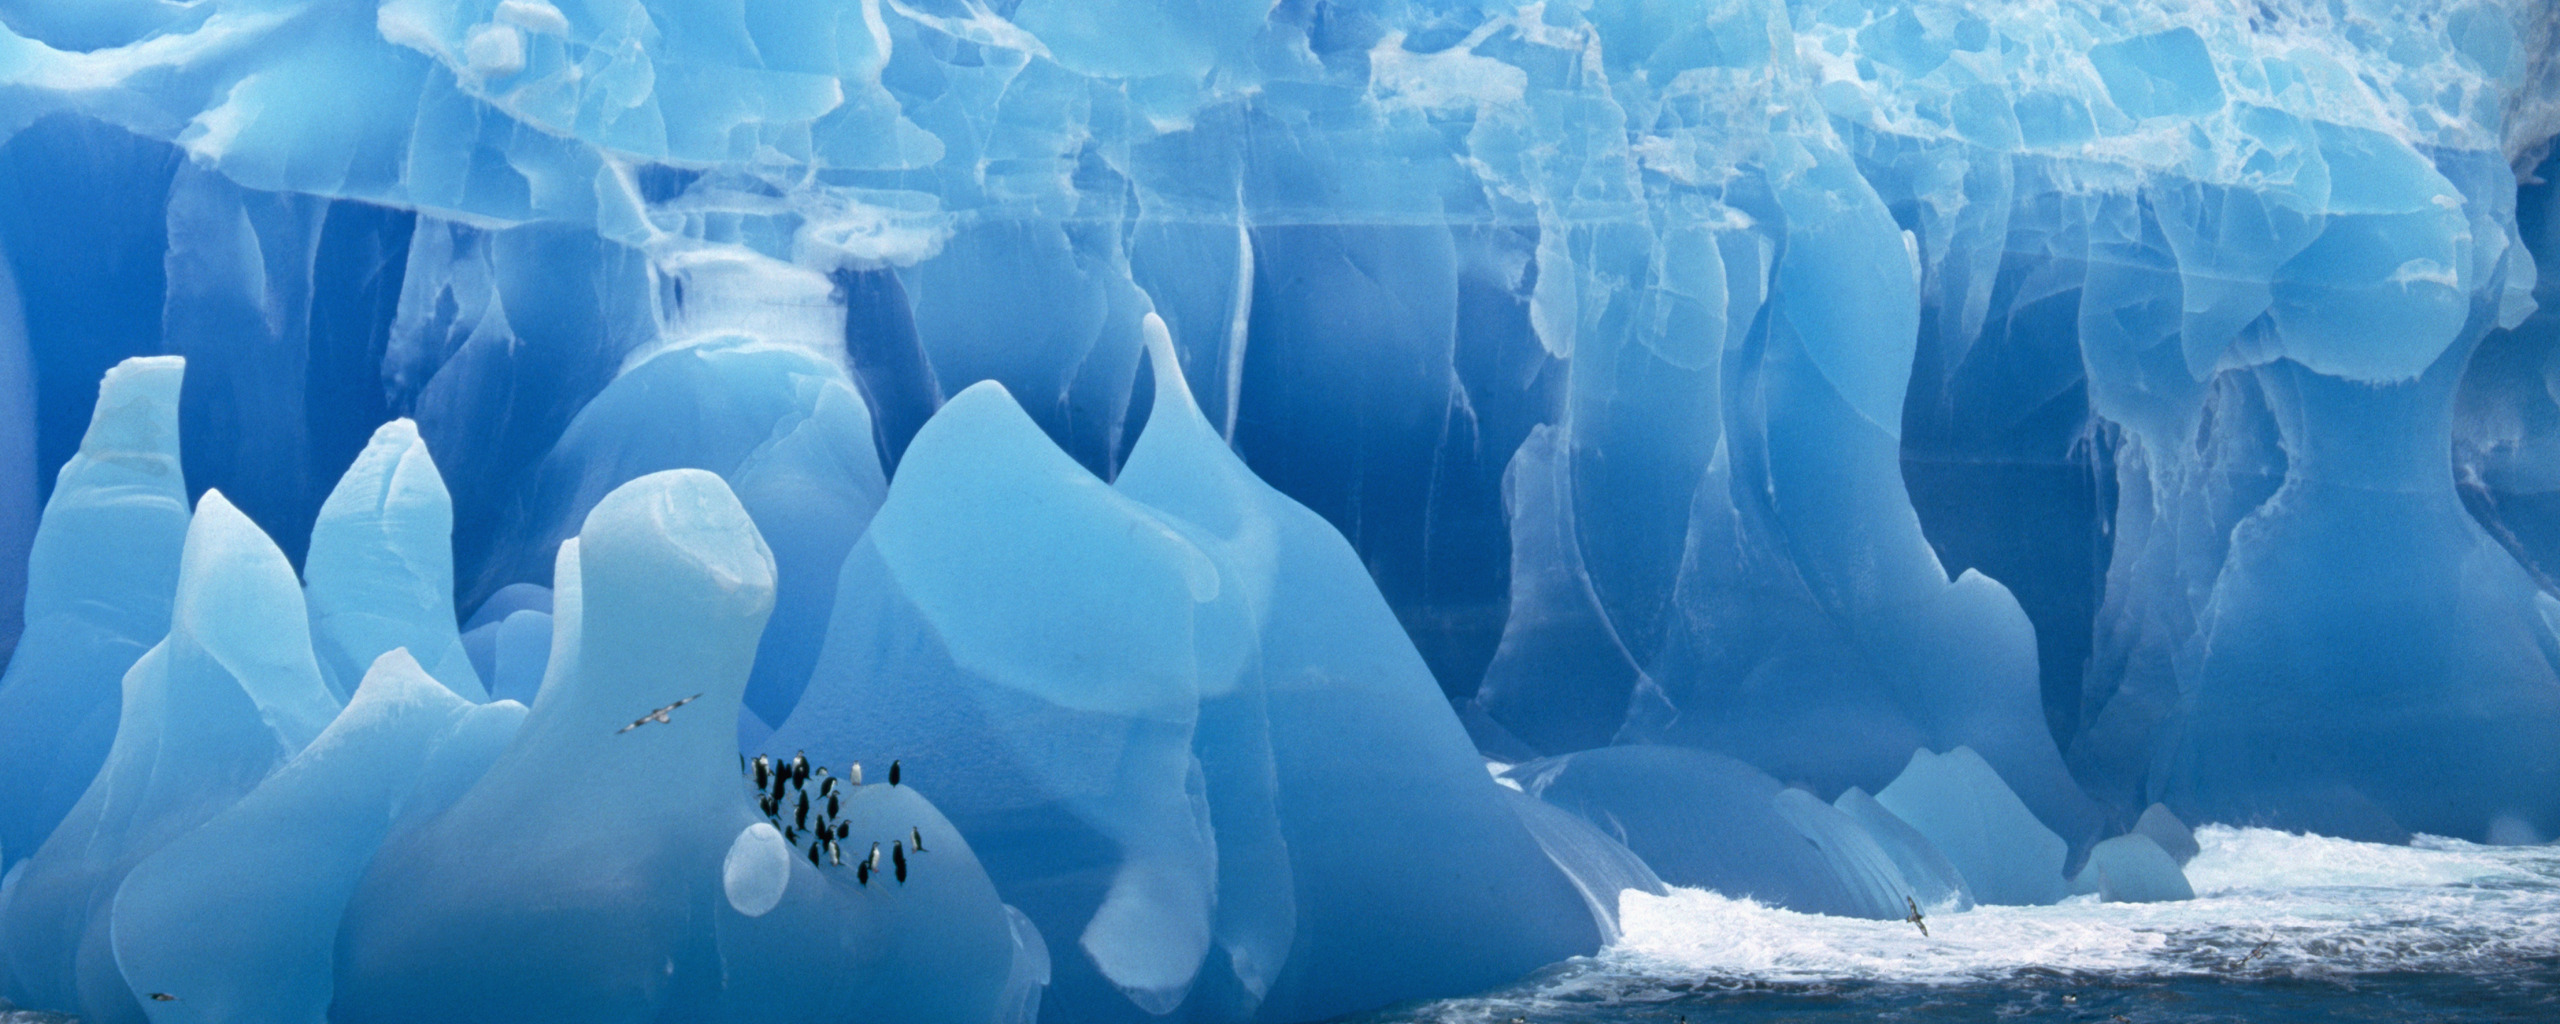 Обои лед 3. Обои на рабочий стол лед. Сон ледник. Ледник с пингвинами заставка на рабочий стол. Ледяное море Фридриха.